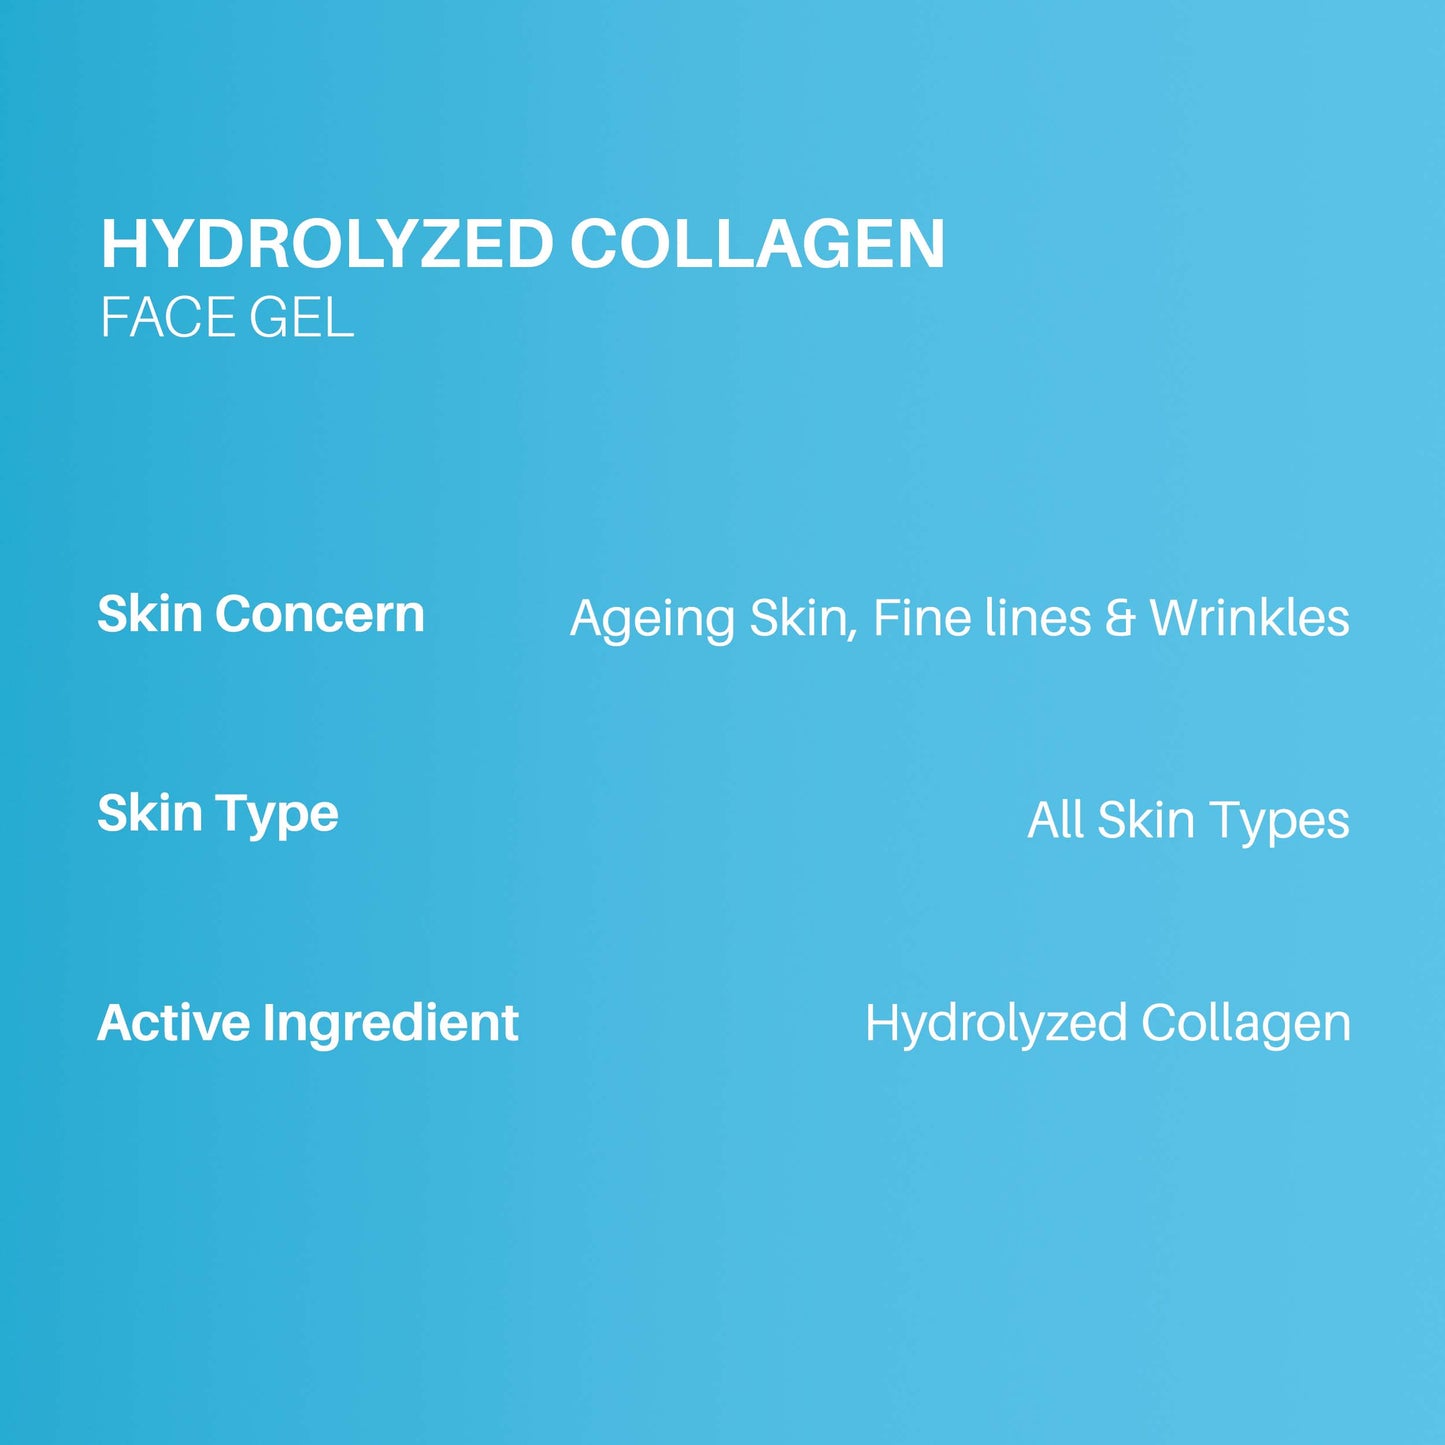 DermDoc Hydrolyzed Collagen Skin Tightening Face Gel For Plump & Youthful Skin (50g)